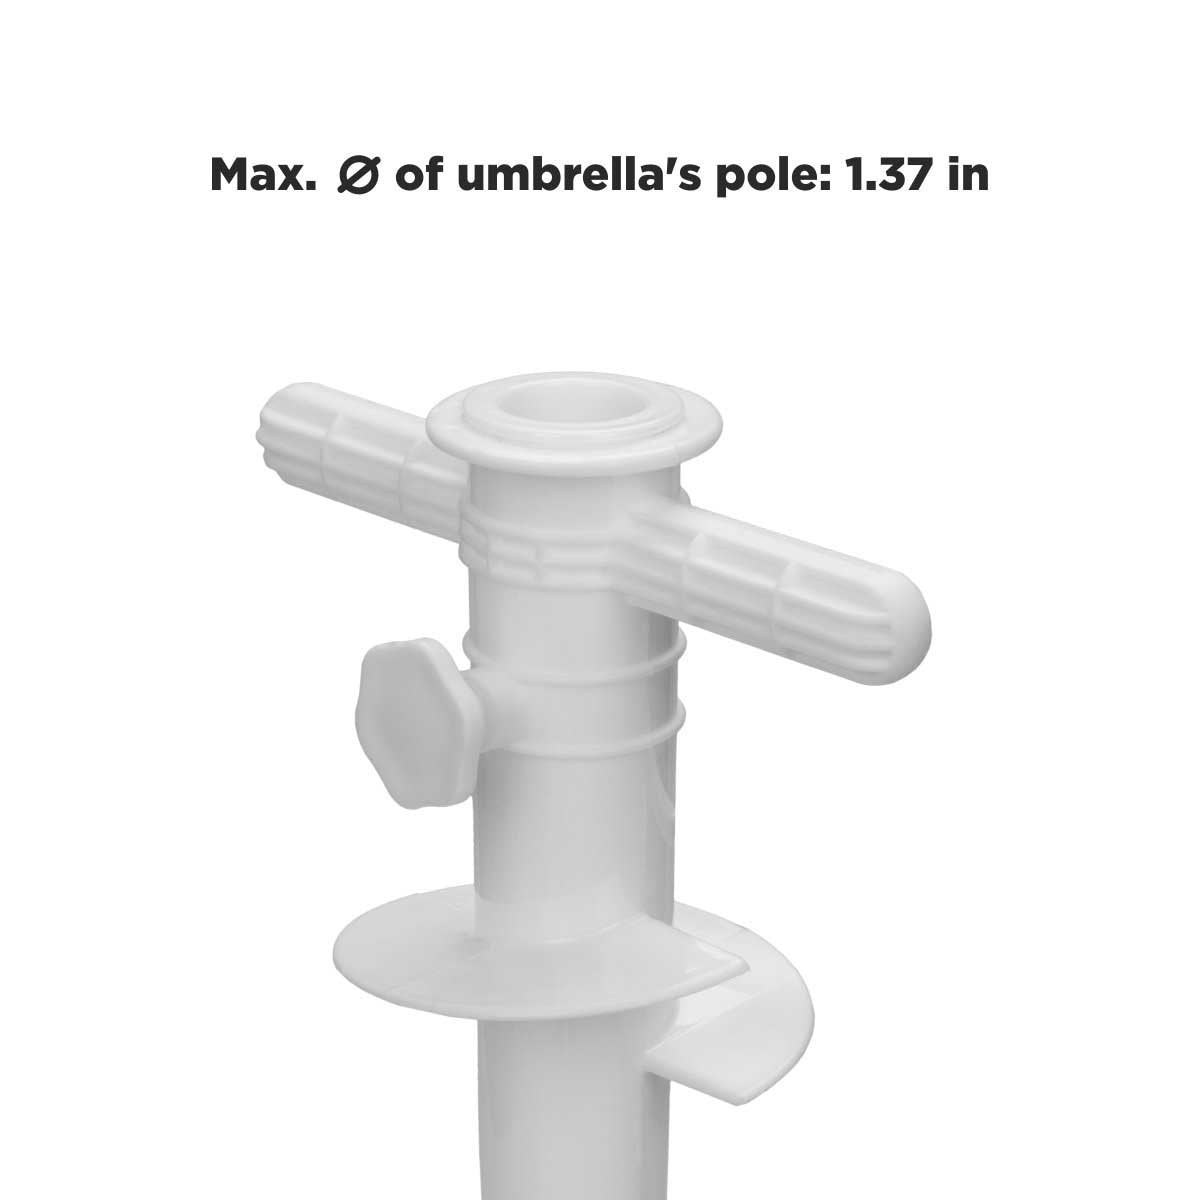 Max umbrella pole diameter the Plastic Beach Umbrella Sand Anchor holds is 1.37 inches